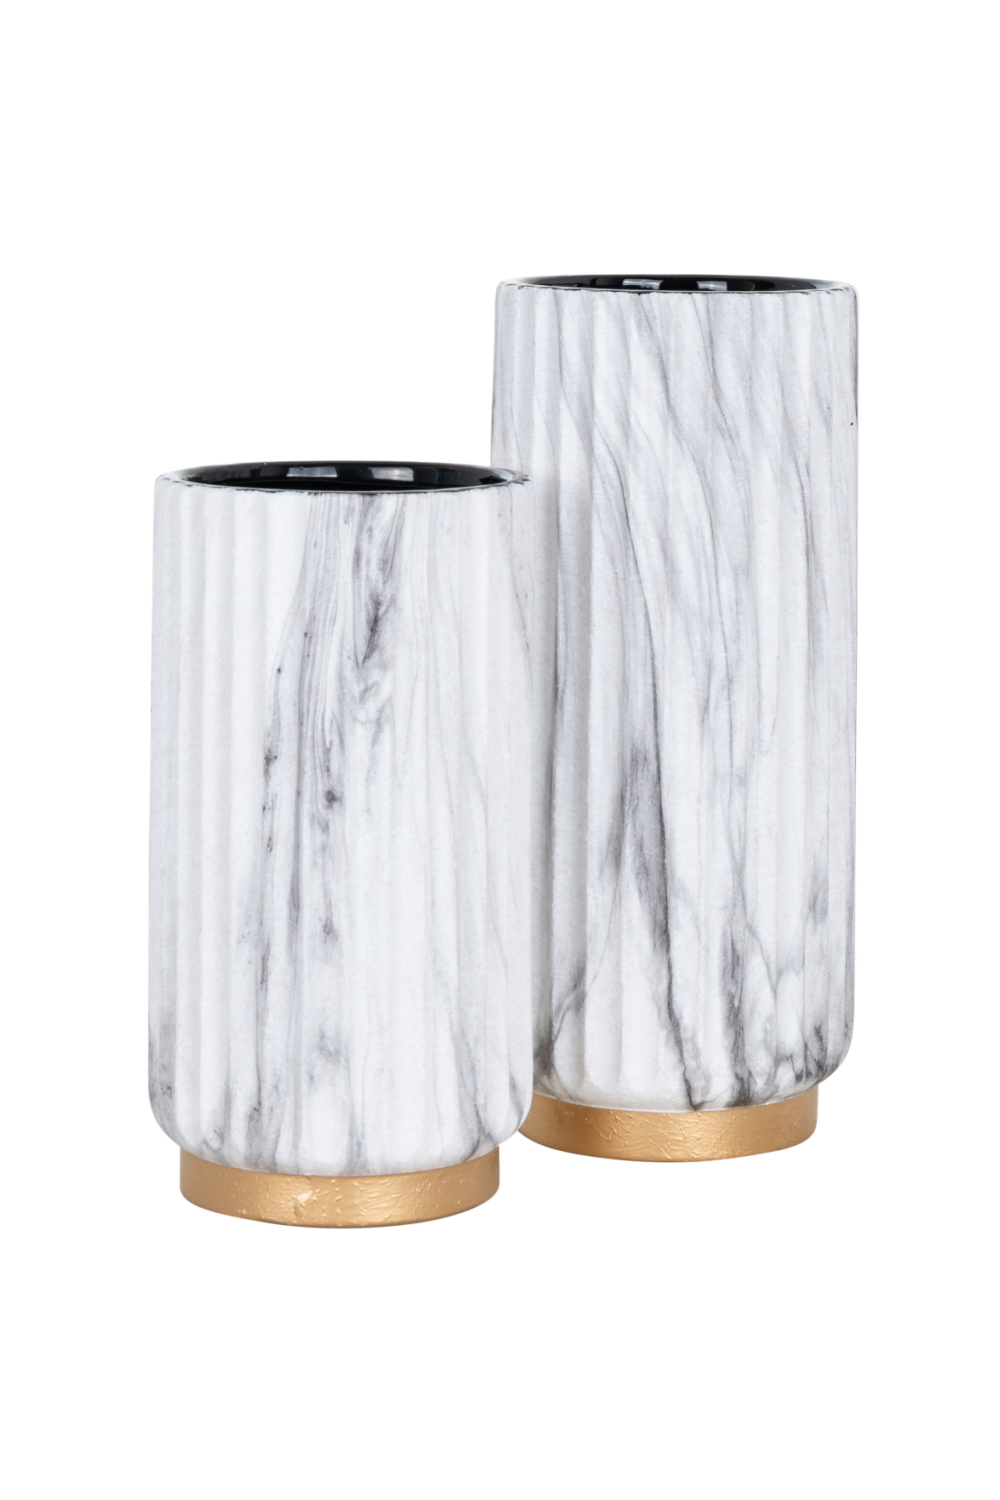 Corrugated White Ceramic Vase S | OROA Kenji | OROA.com